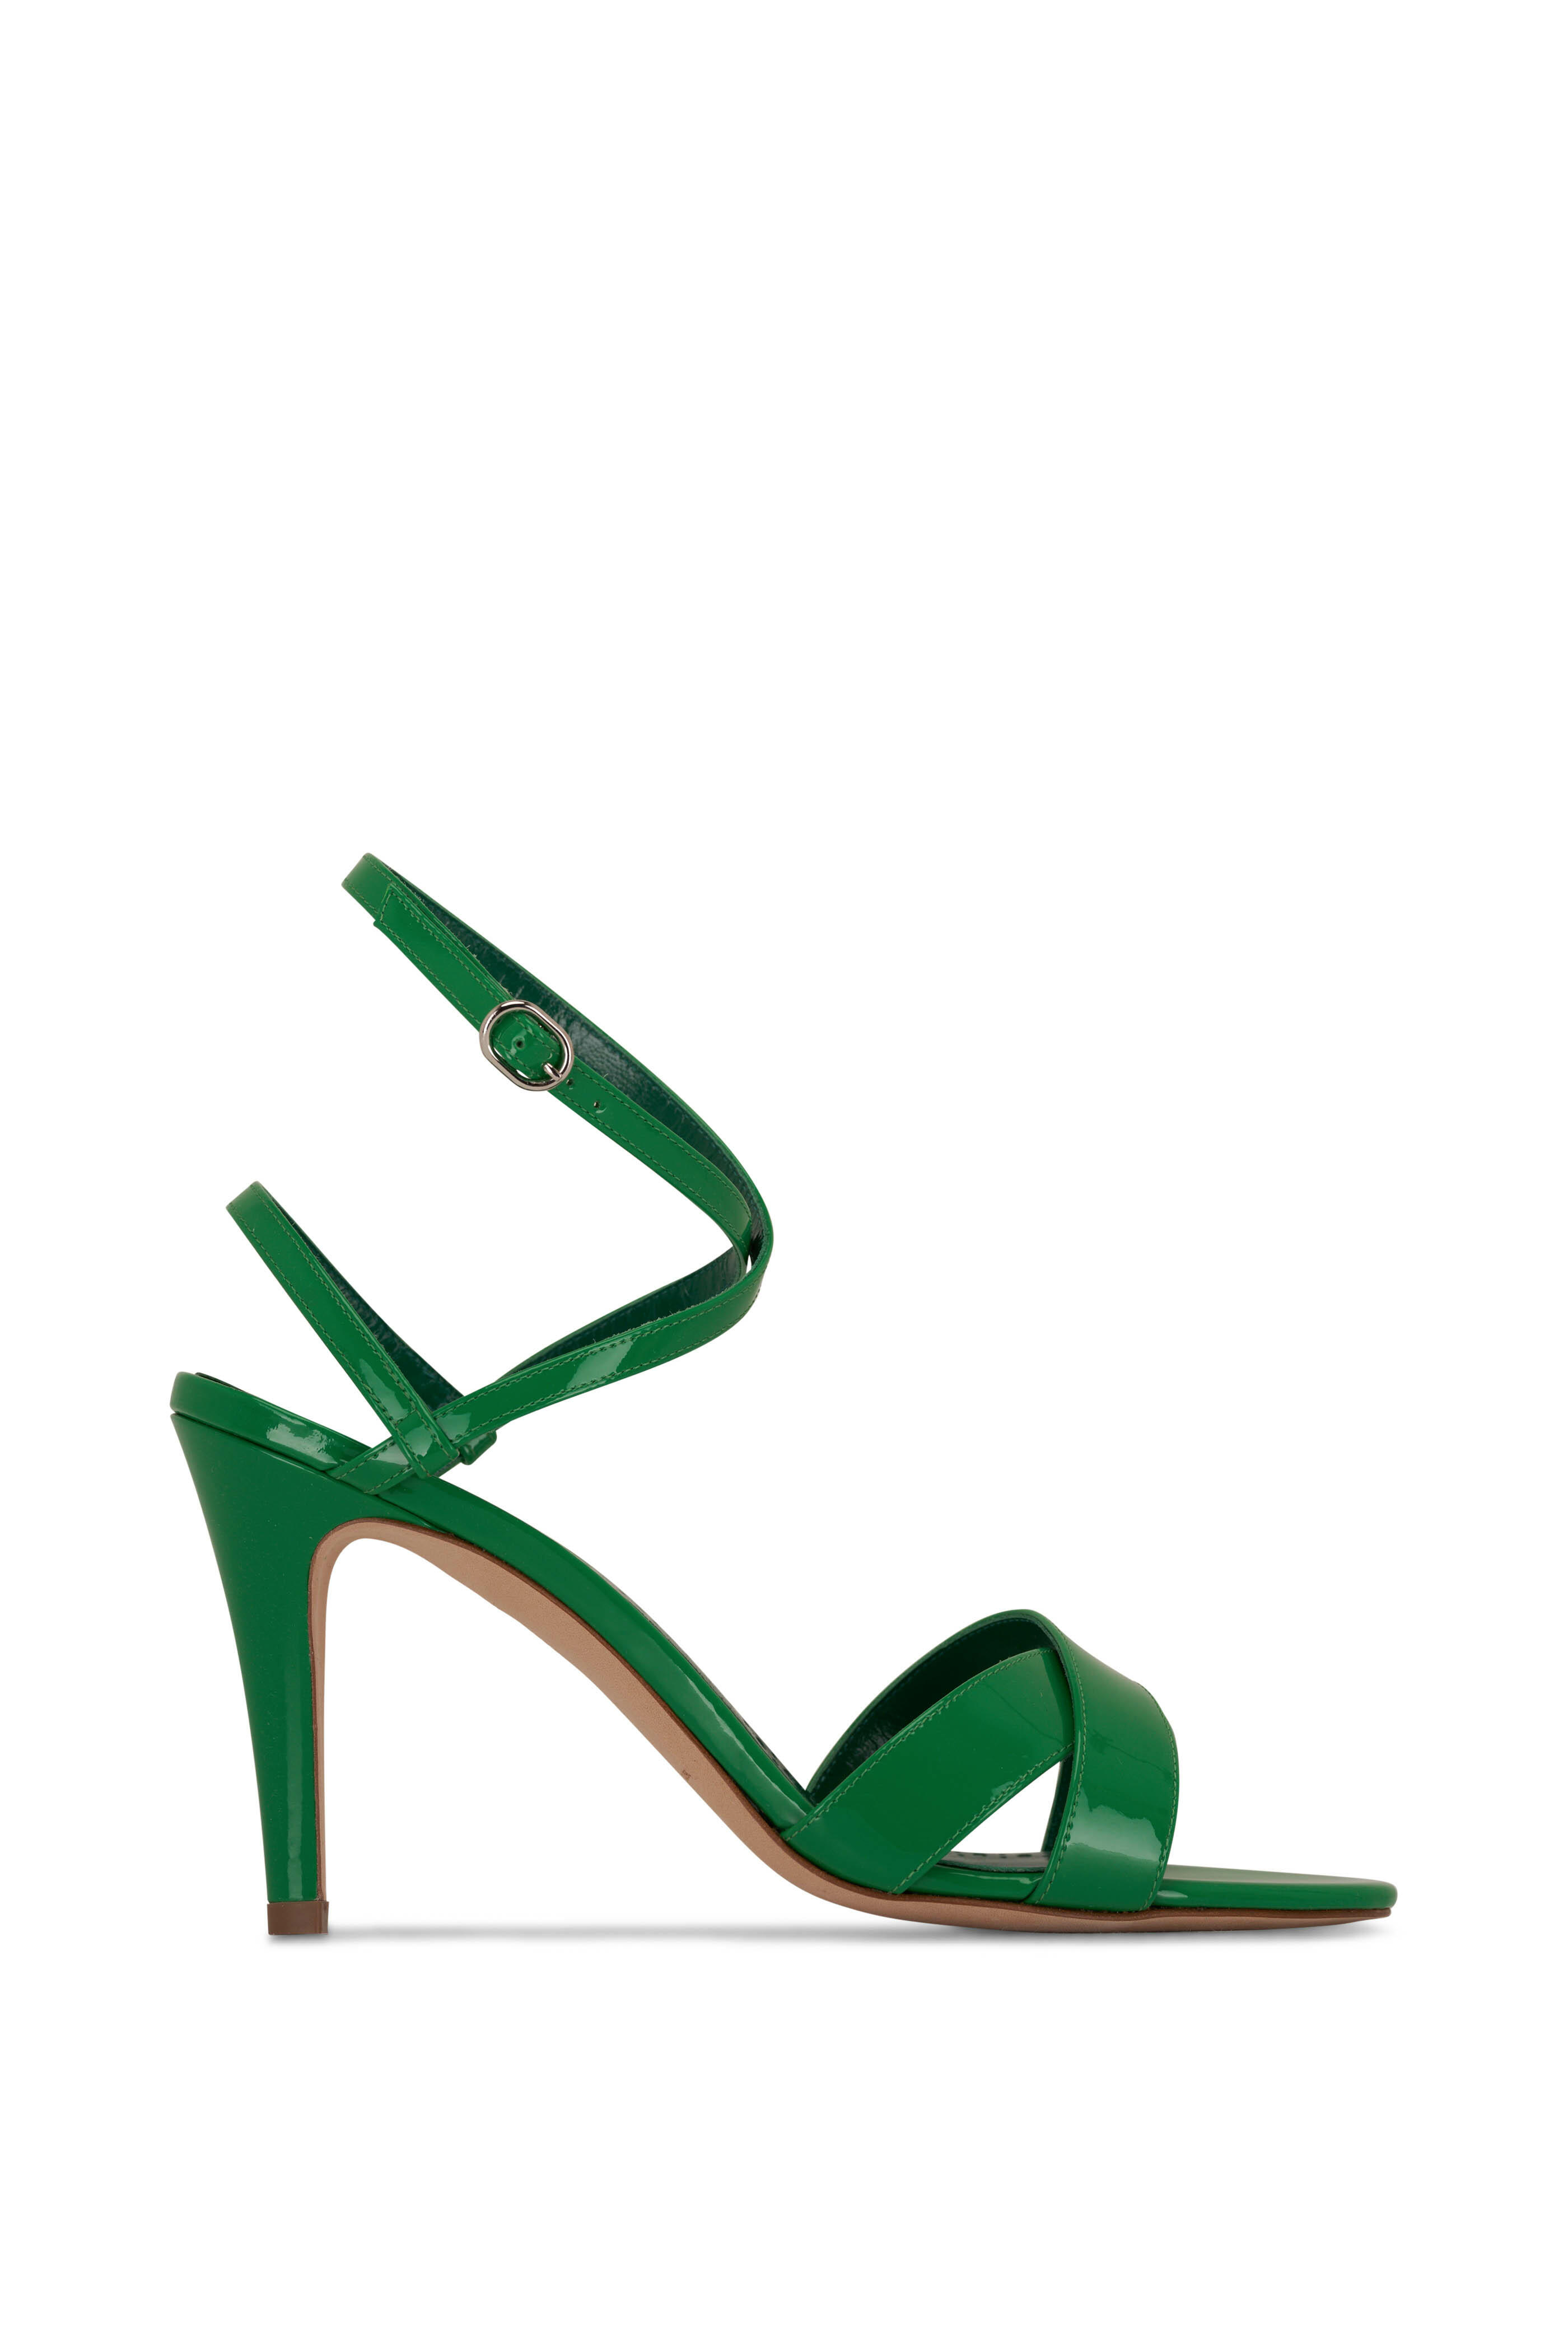 Manolo Blahnik - Tormentas Bright Green Ankle Strap Sandal, 90mm